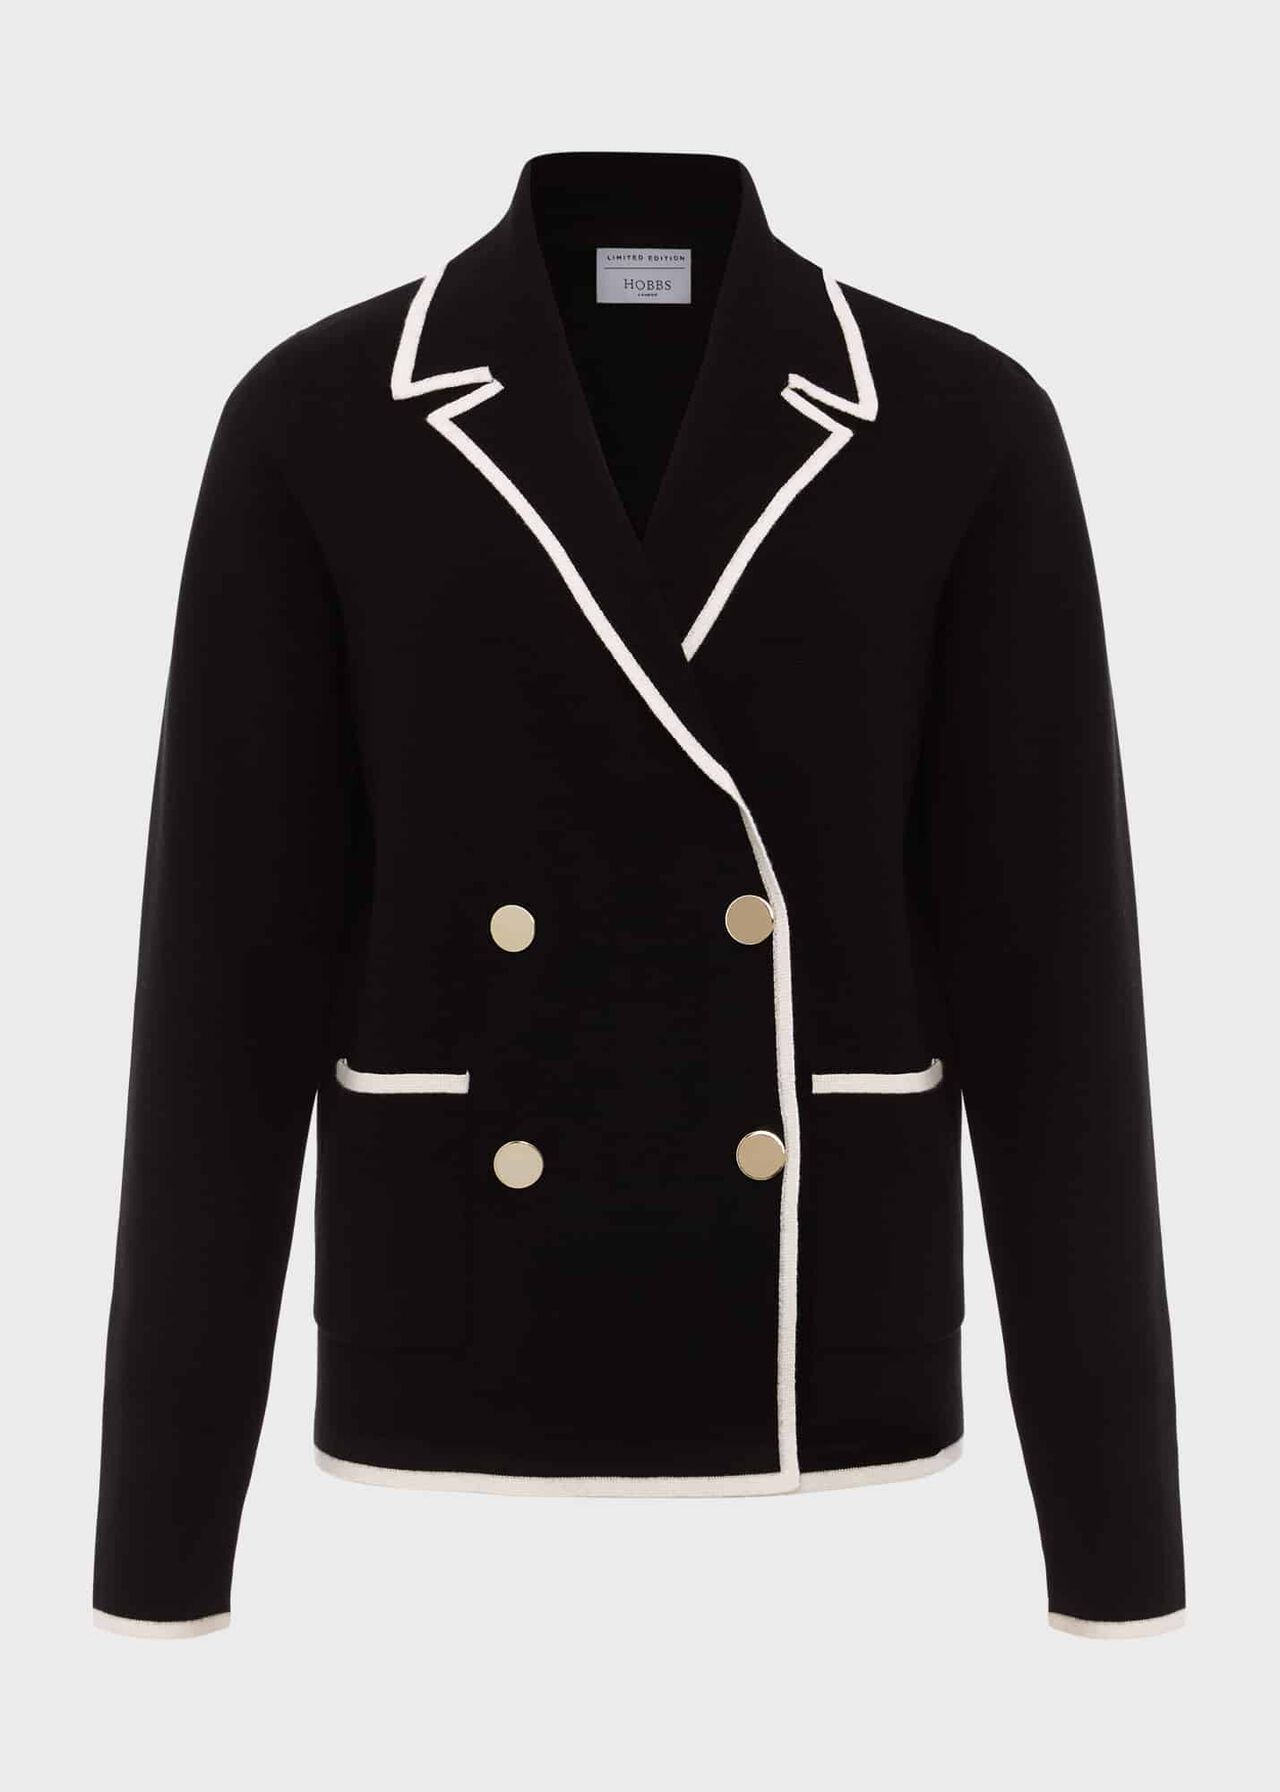 Hatfield Cotton Wool Jacket, Black Ivory, hi-res